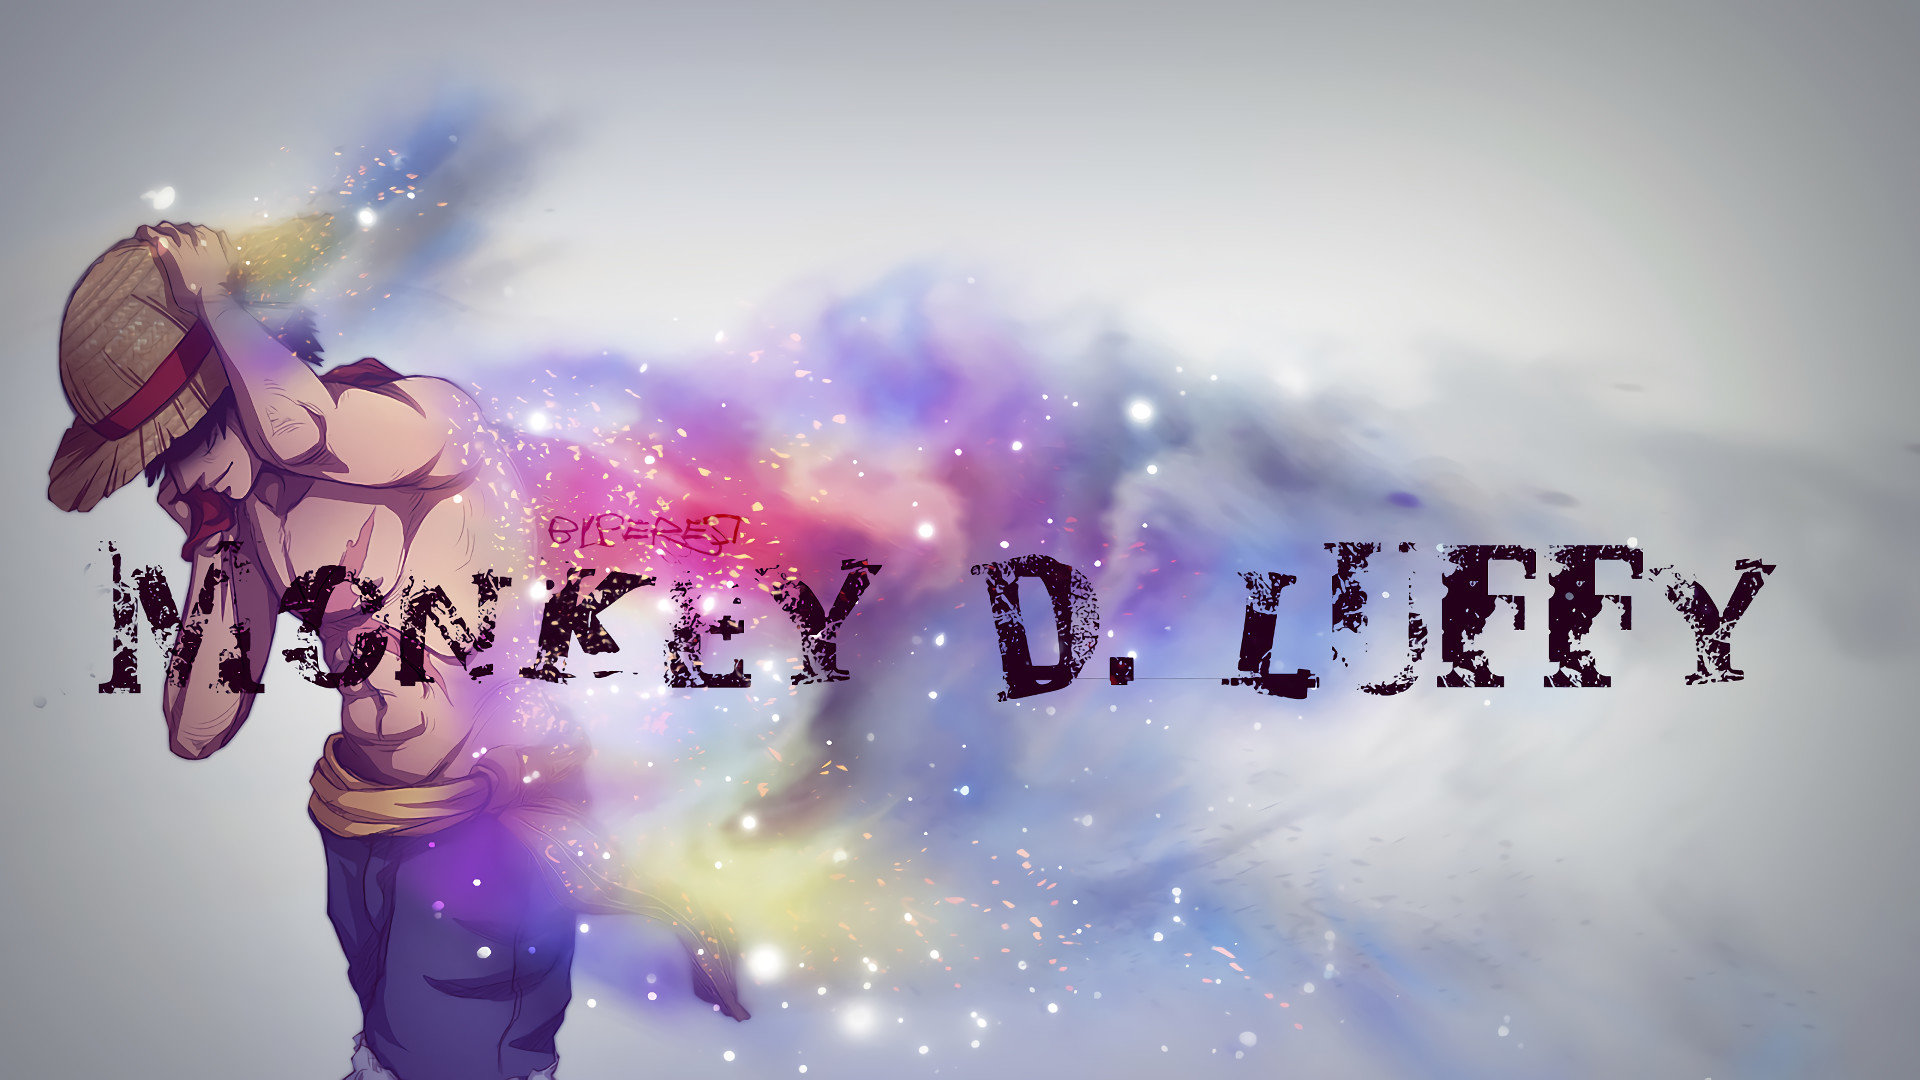 Free Download Monkey D - Illustration - HD Wallpaper 